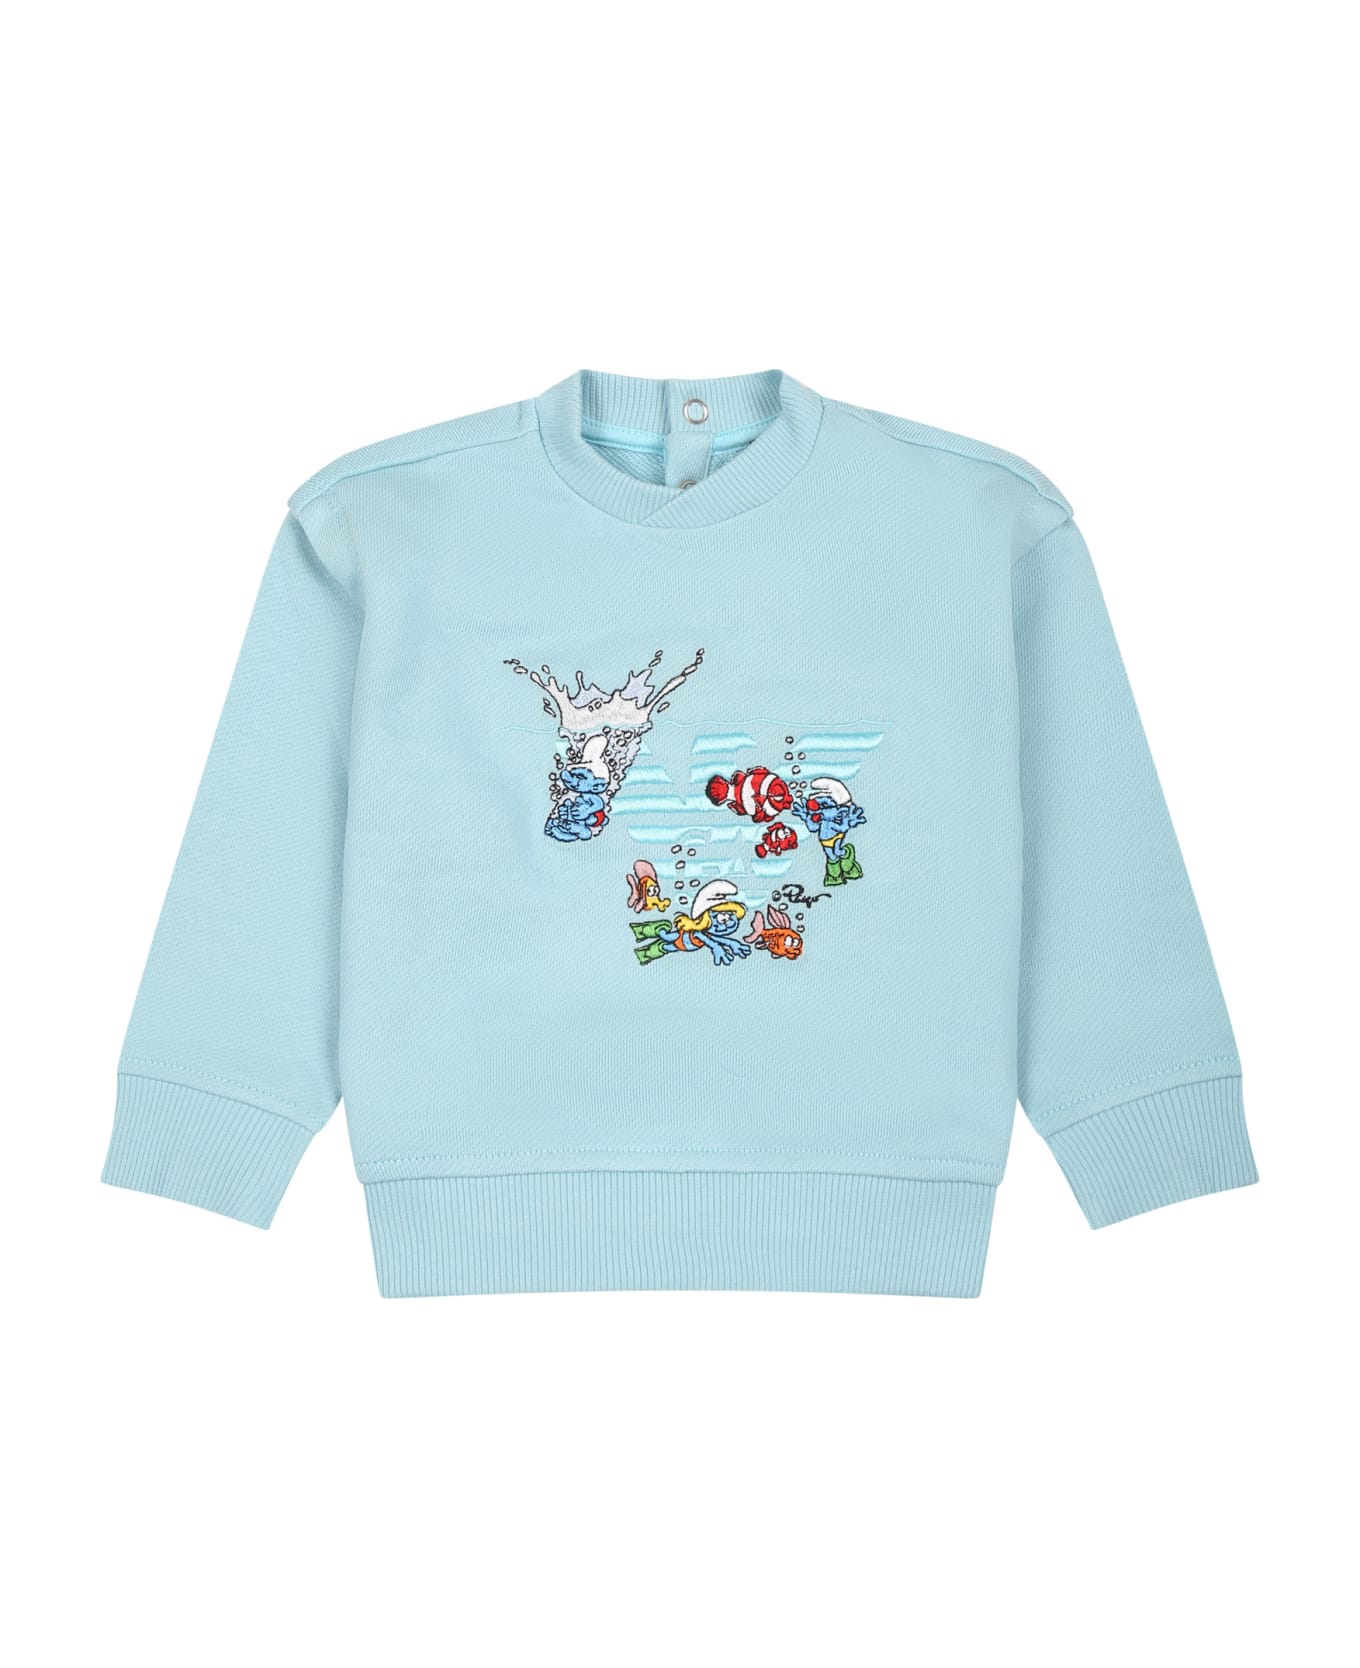 Emporio Armani Light Blue Sweatshirt For Baby Boy With The Smurfs - Light Blue ニットウェア＆スウェットシャツ